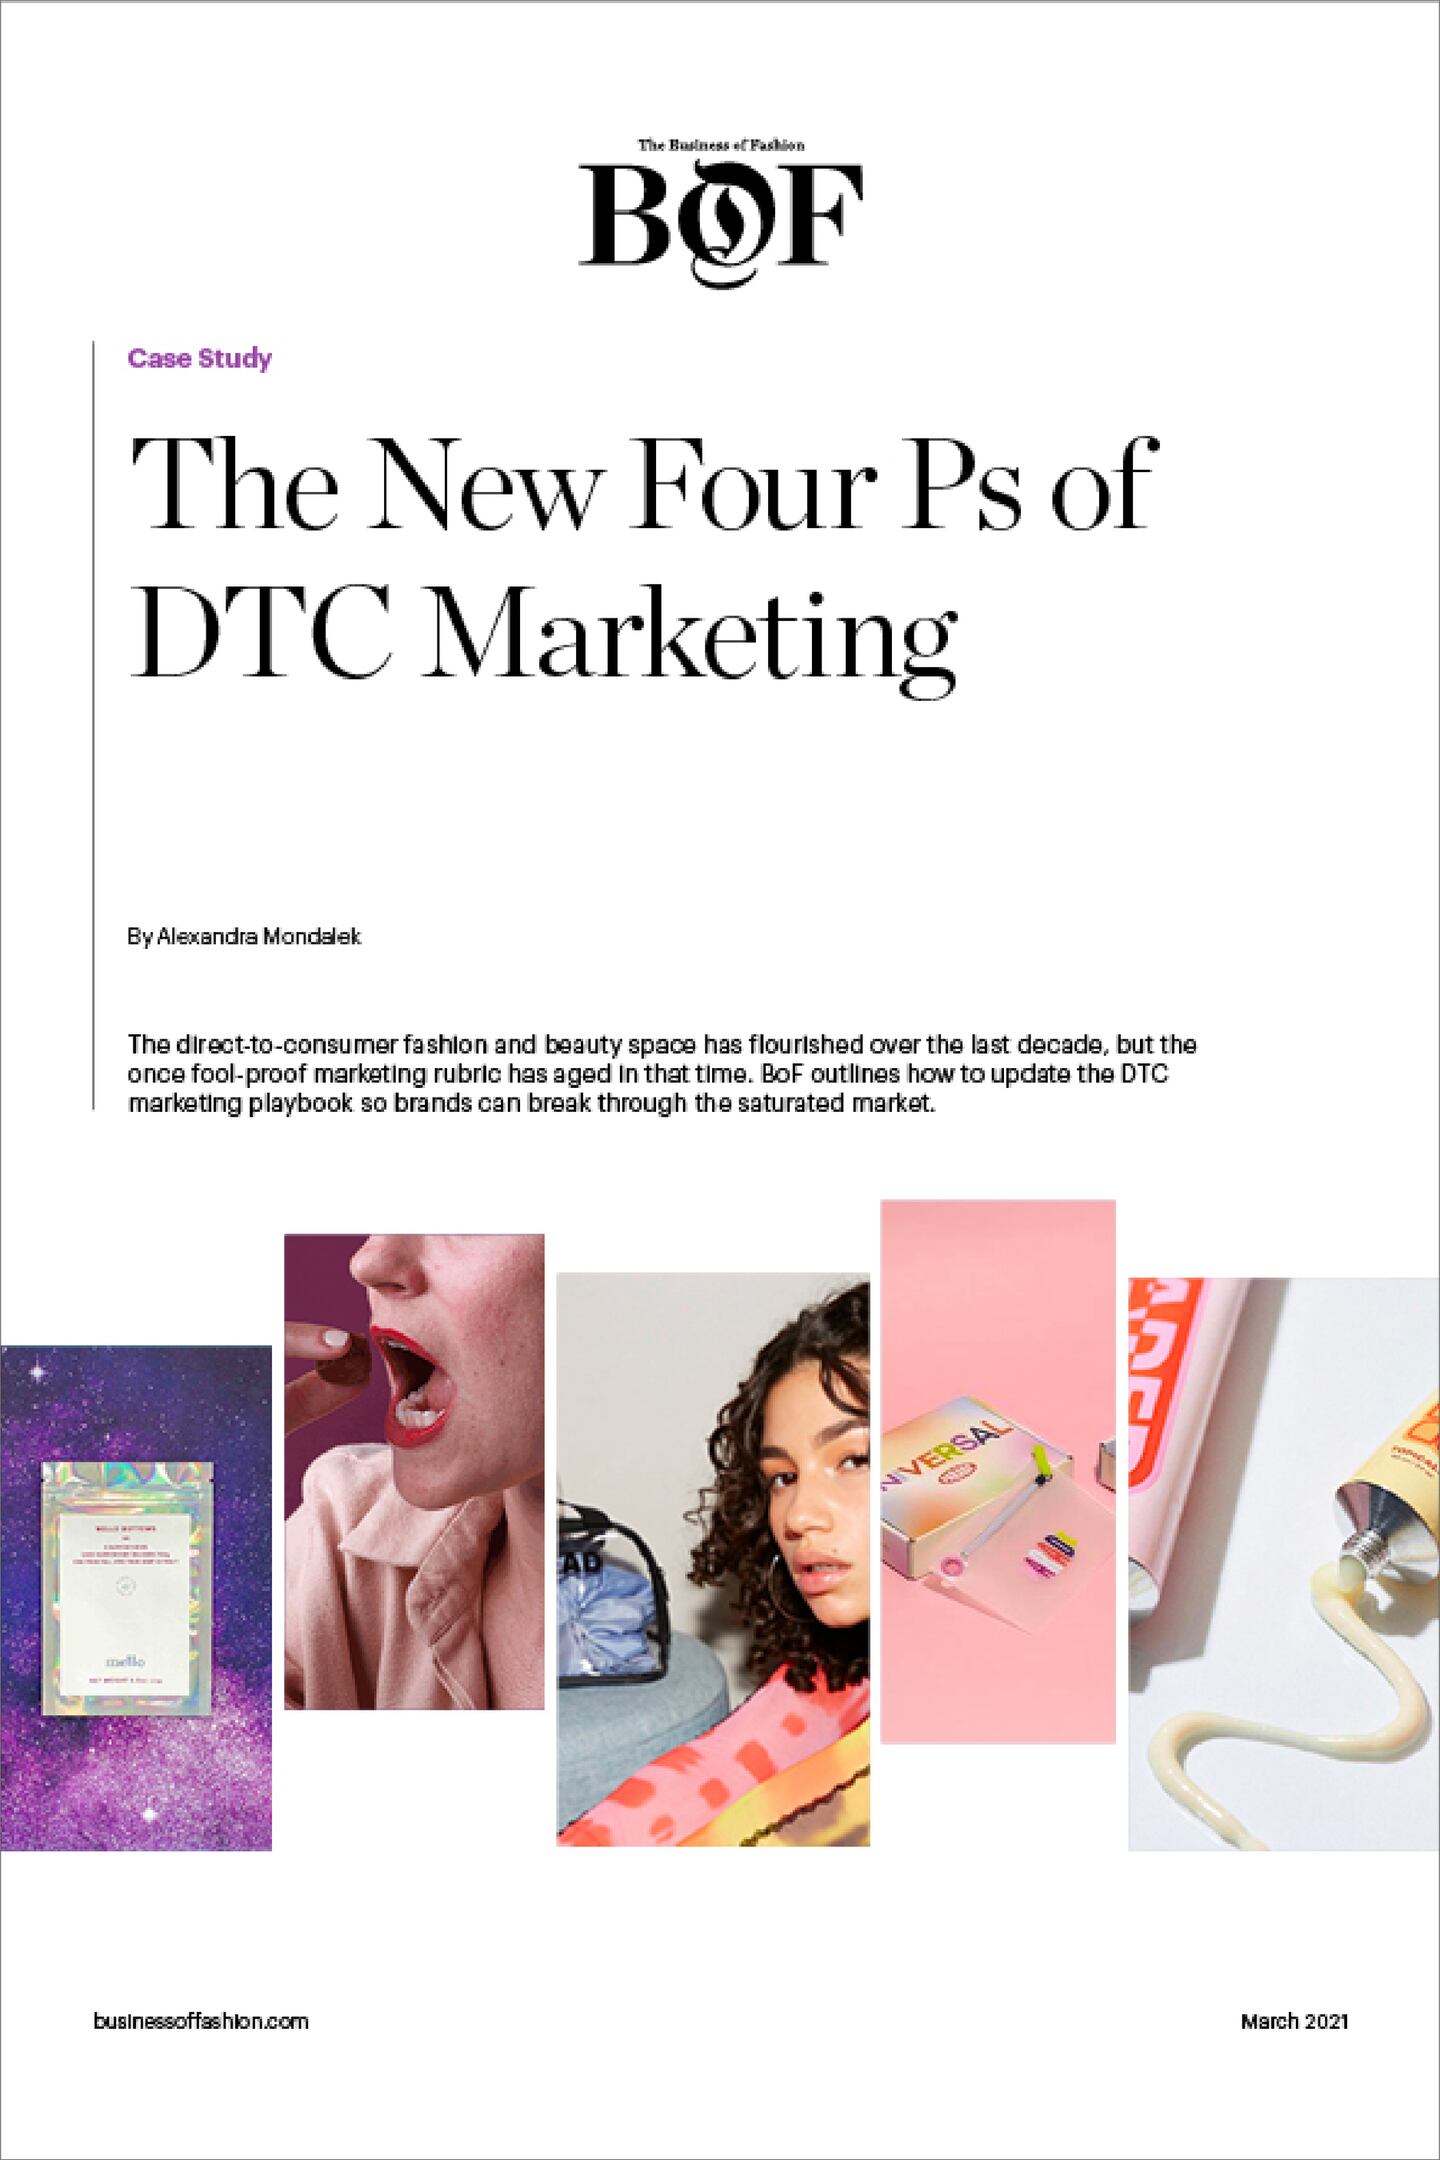 DTC marketing case study standing edge